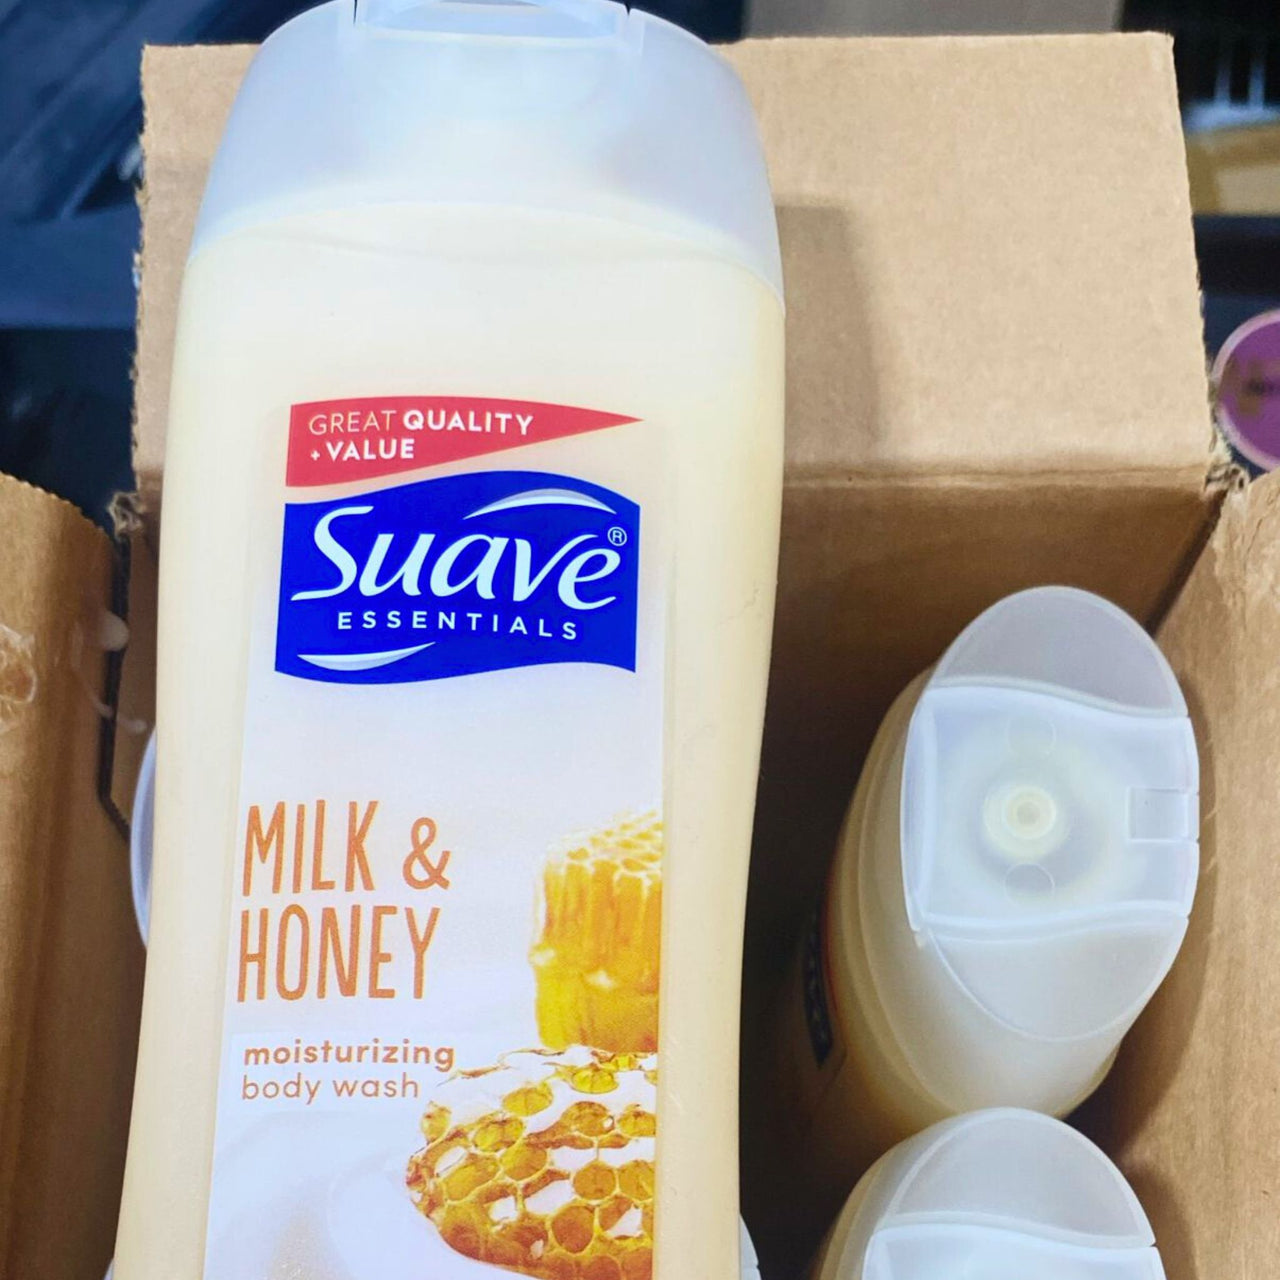 Suave Essentials Milk & Honey Moisturizing Body Wash